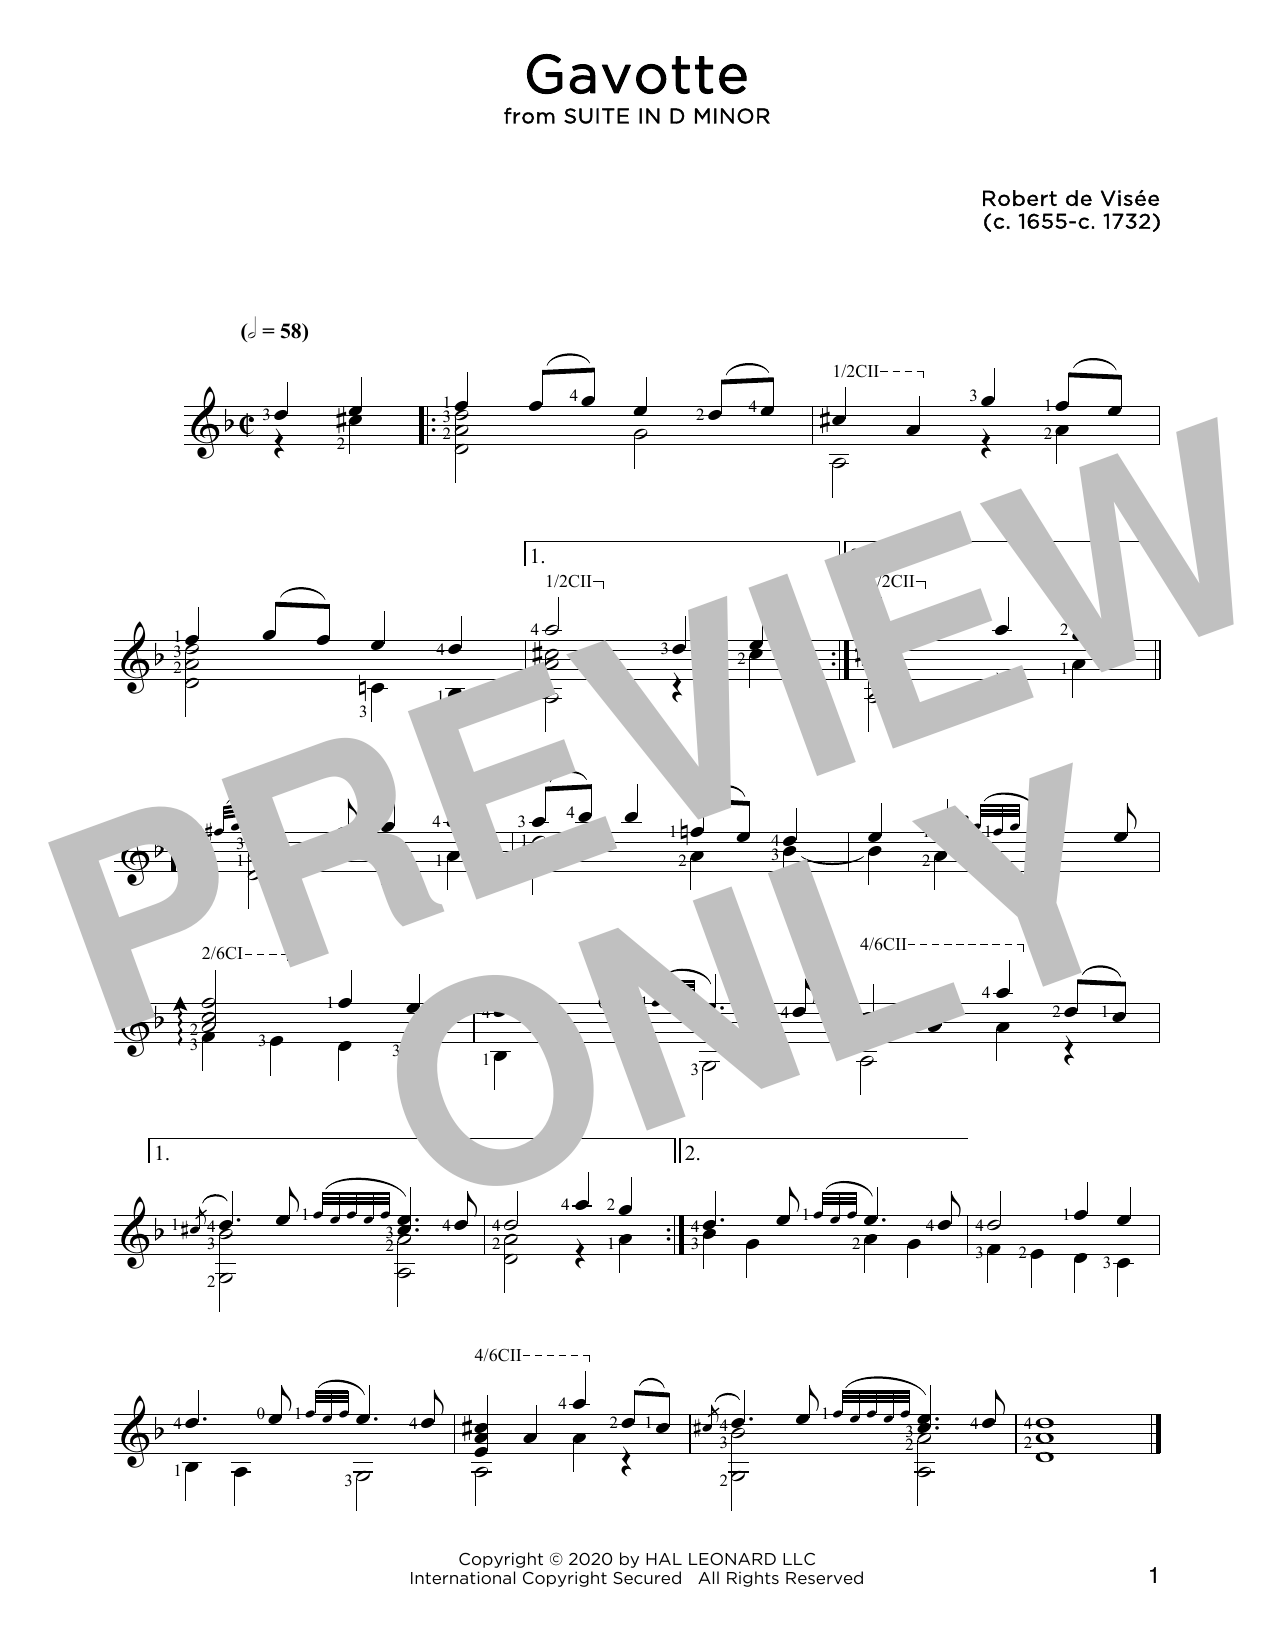 Robert de Visee Gavotte Sheet Music Notes & Chords for Solo Guitar - Download or Print PDF